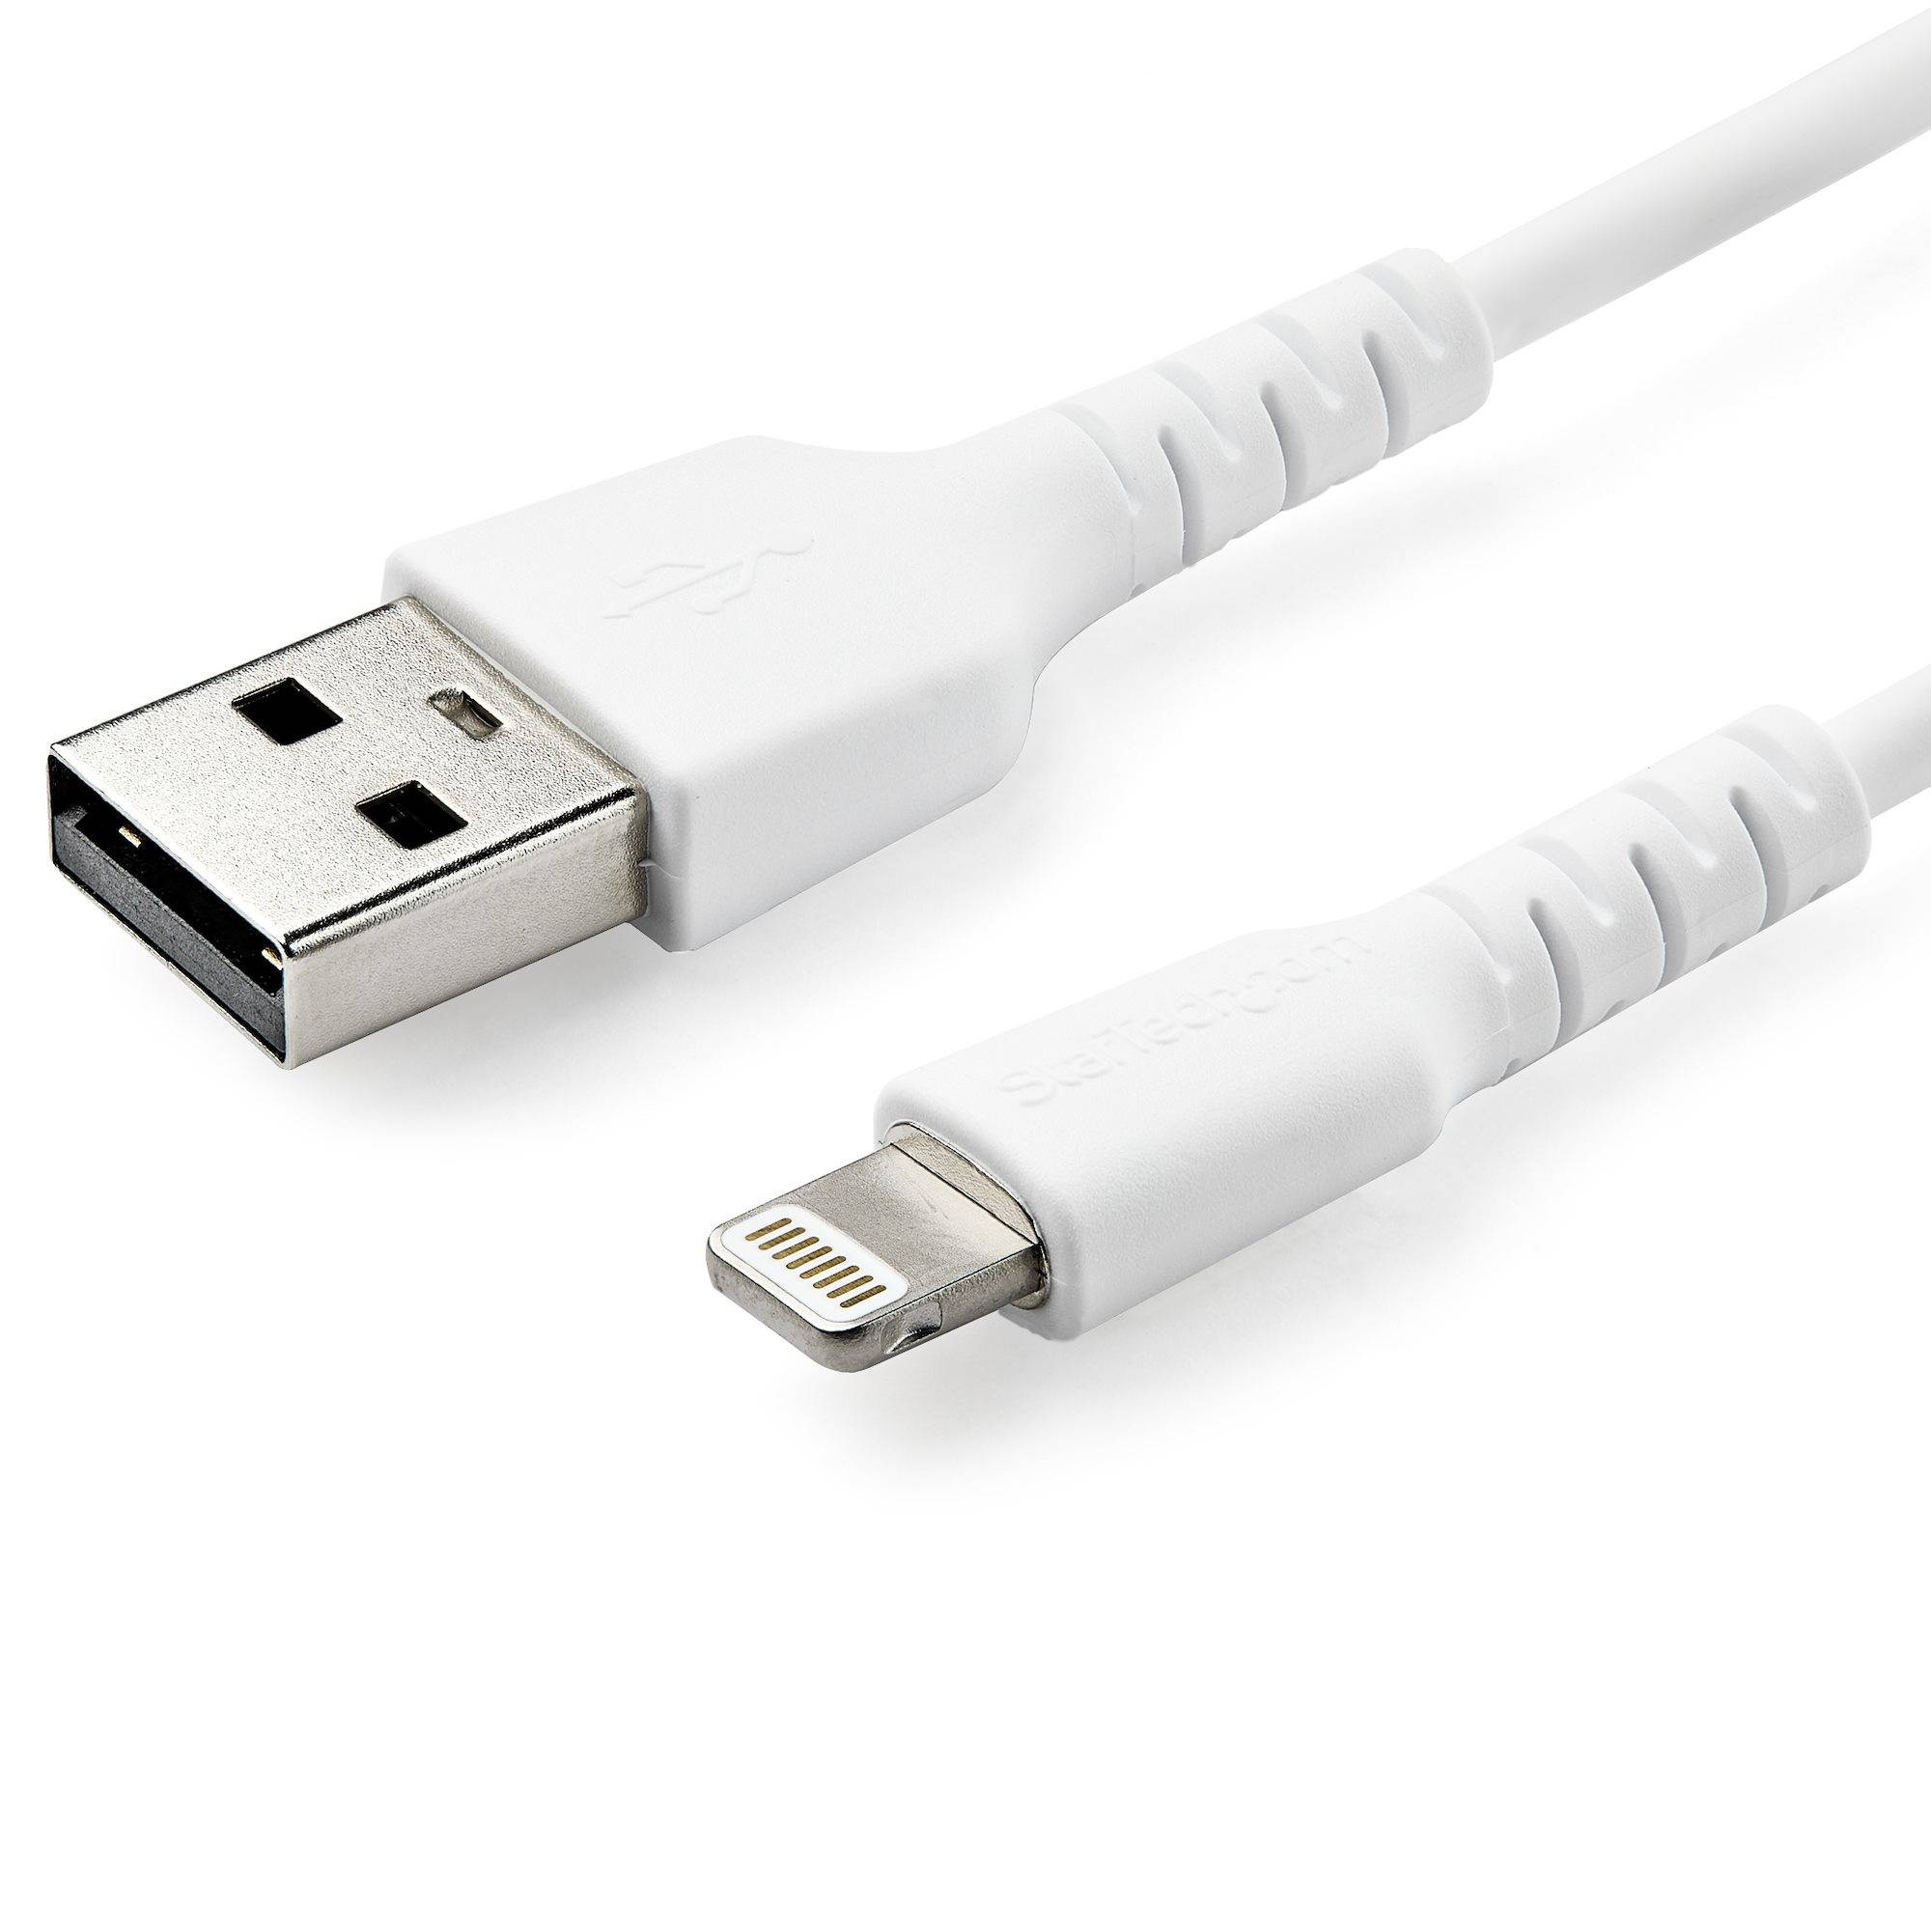 Rca Informatique - Image du produit : 1M USB TO LIGHTNING CABLE APPLE MFI CERTIFIED - WHITE